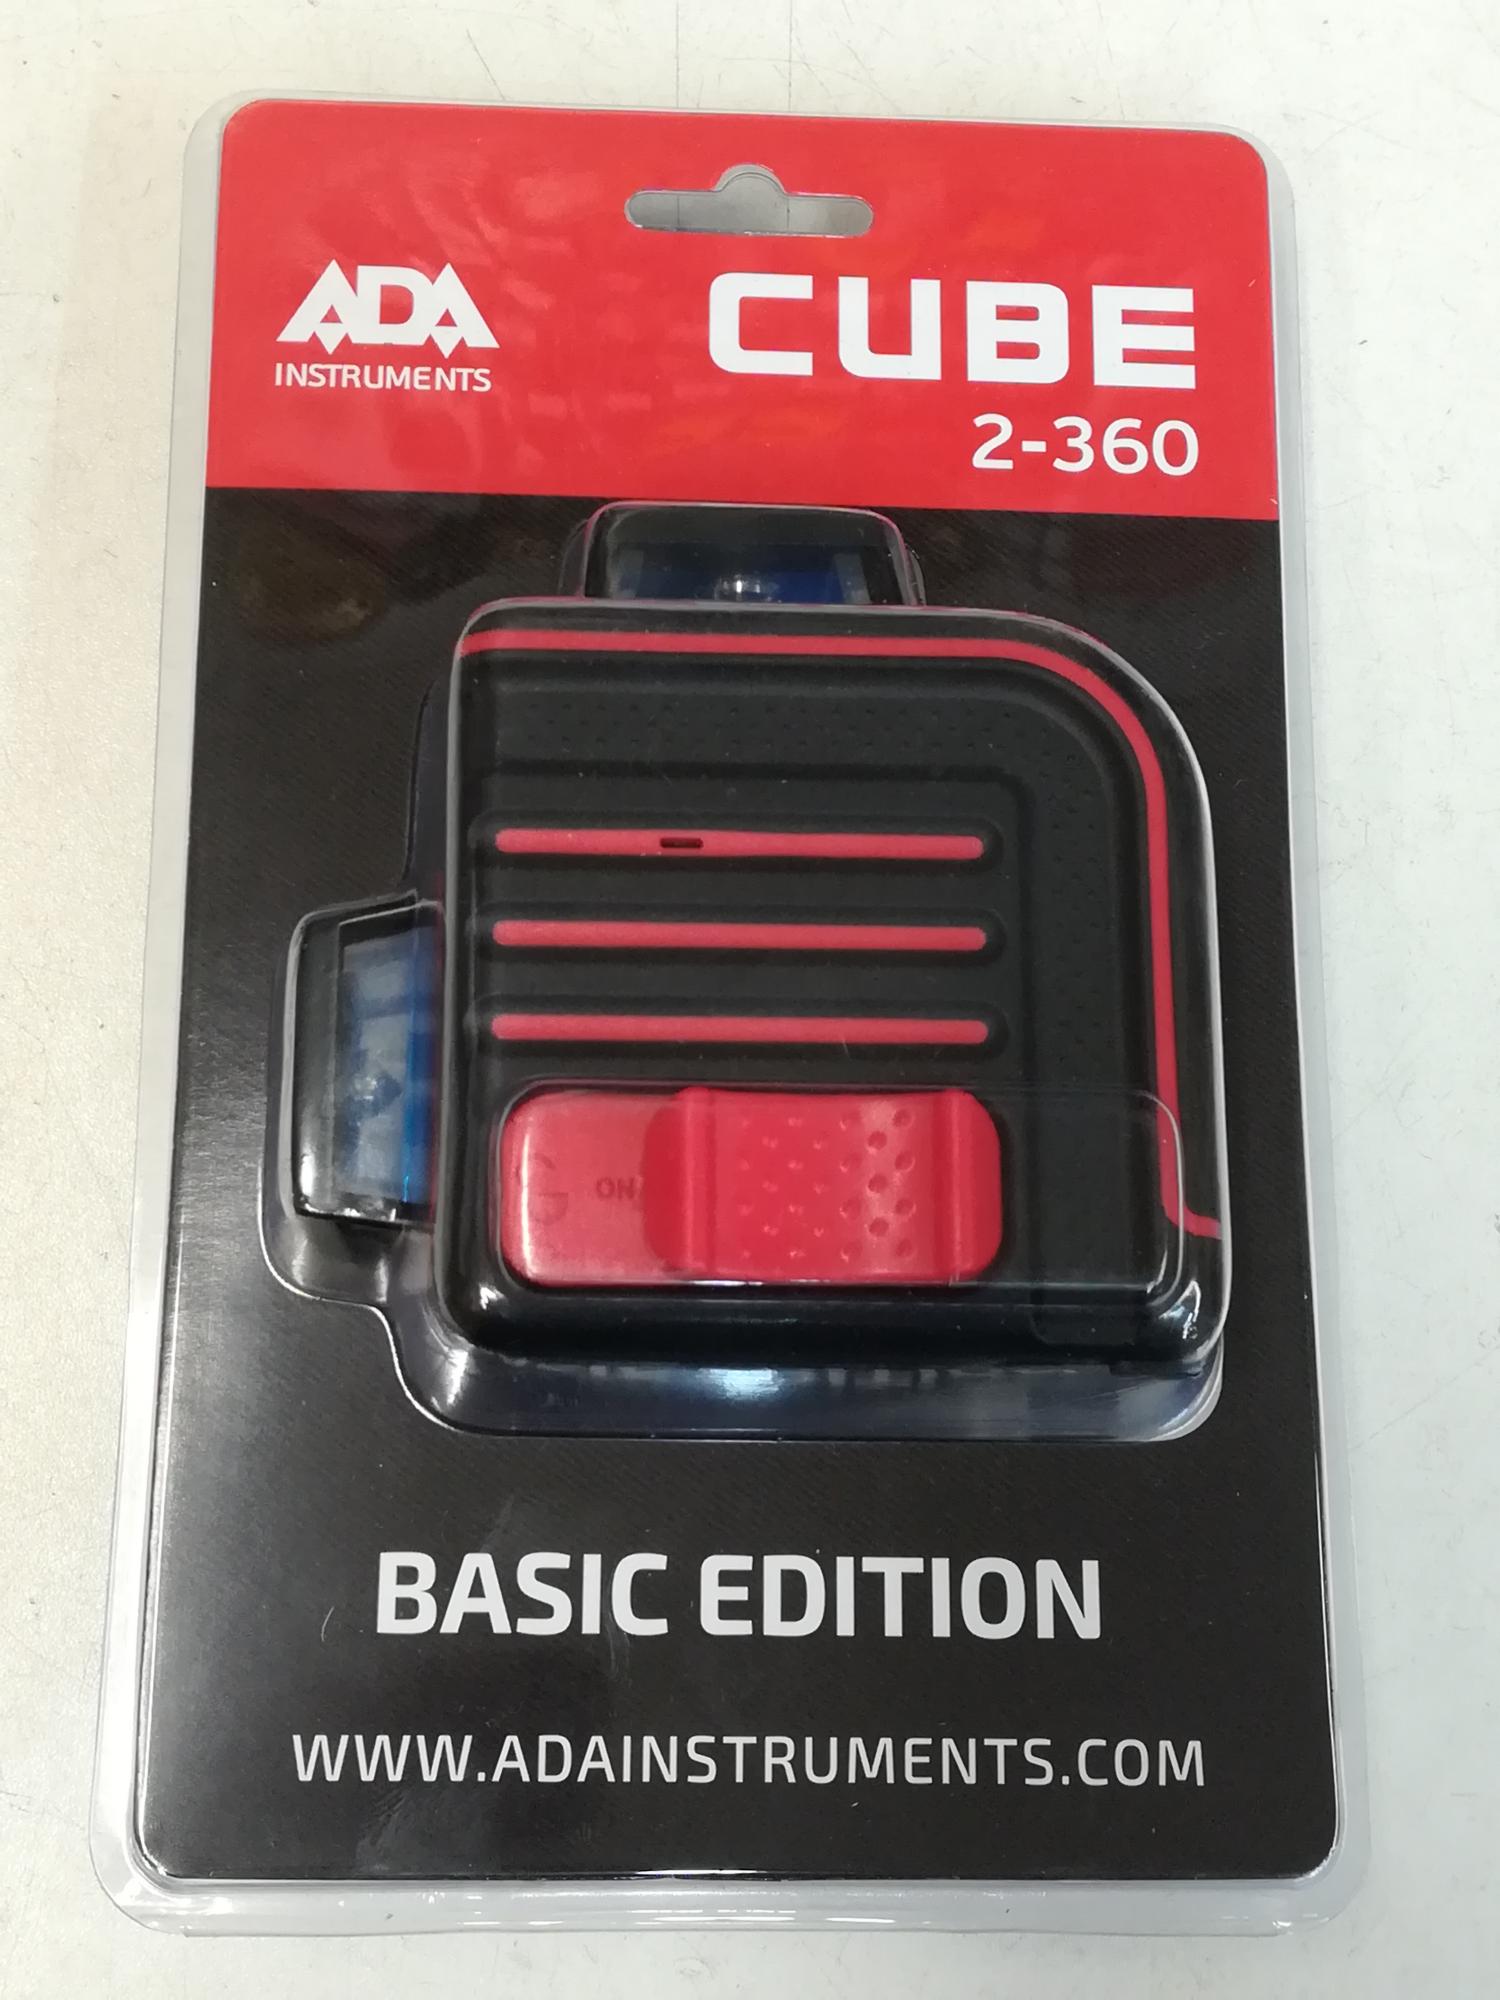 Cube 360 basic edition. Cube 2-360 запчасти. Нивелир ada Cube 2-360 цены.